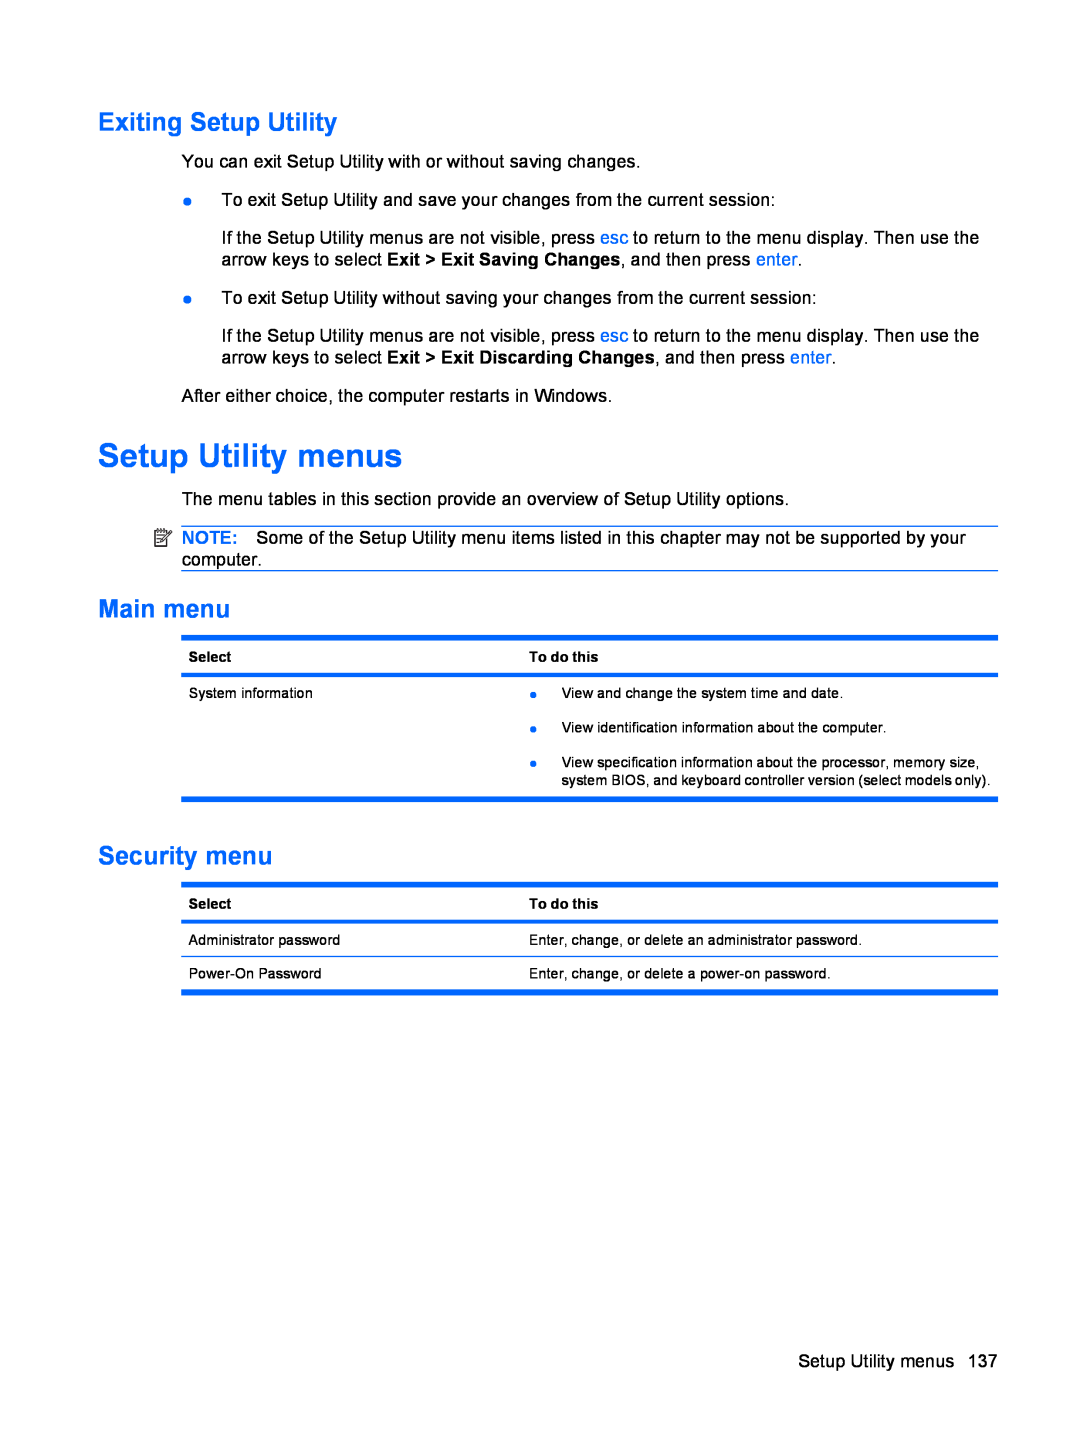 HP dv4-2160us manual Setup Utility menus, Exiting Setup Utility, Main menu, Security menu 